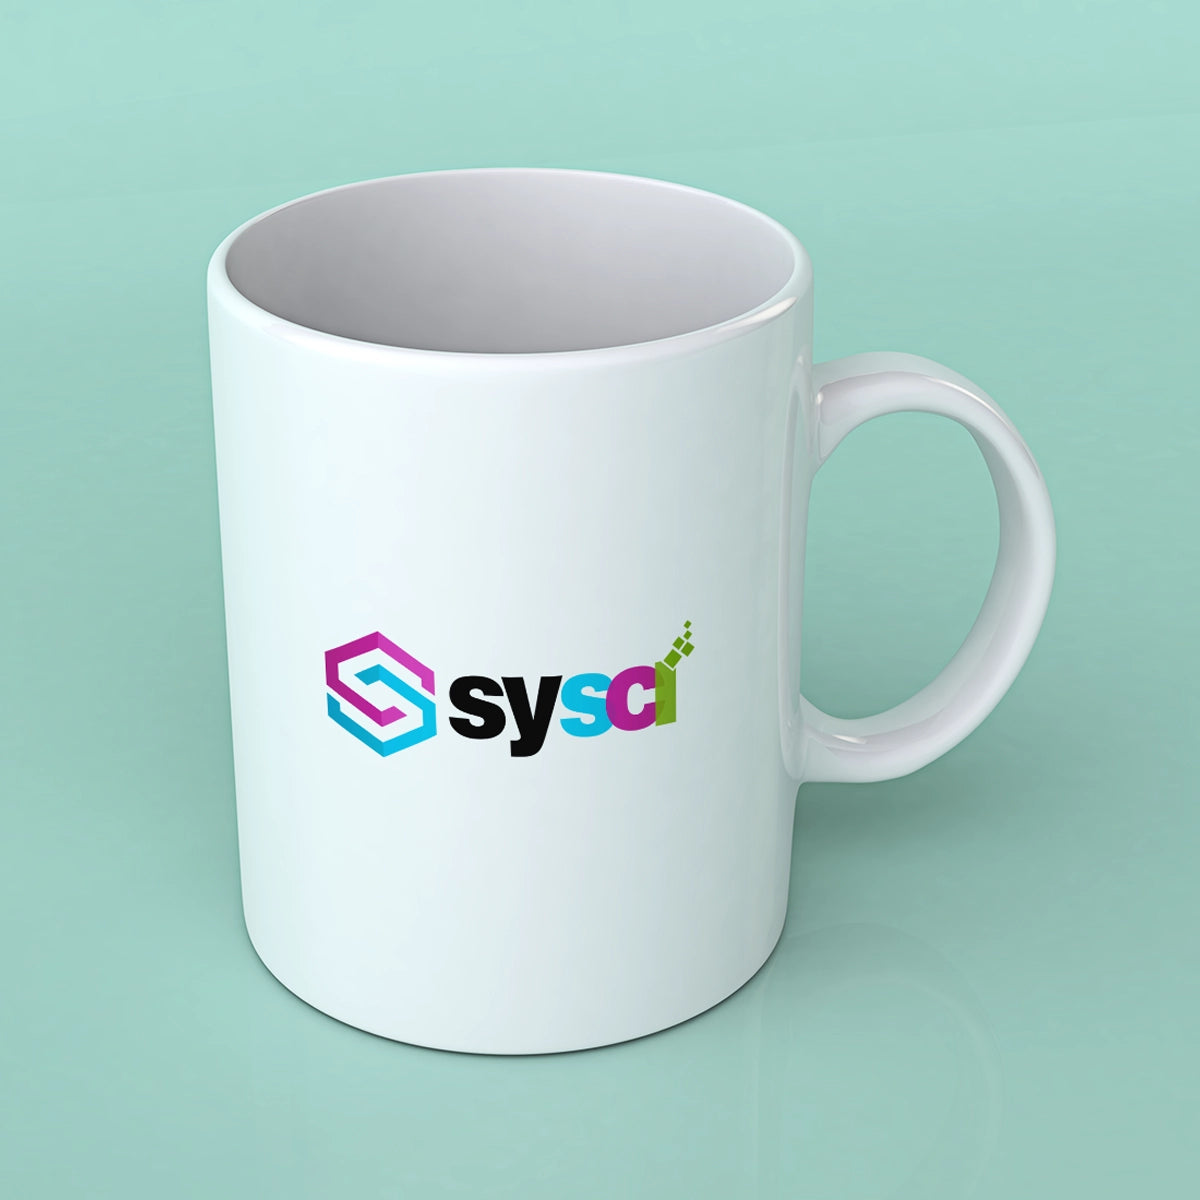 sysci.com